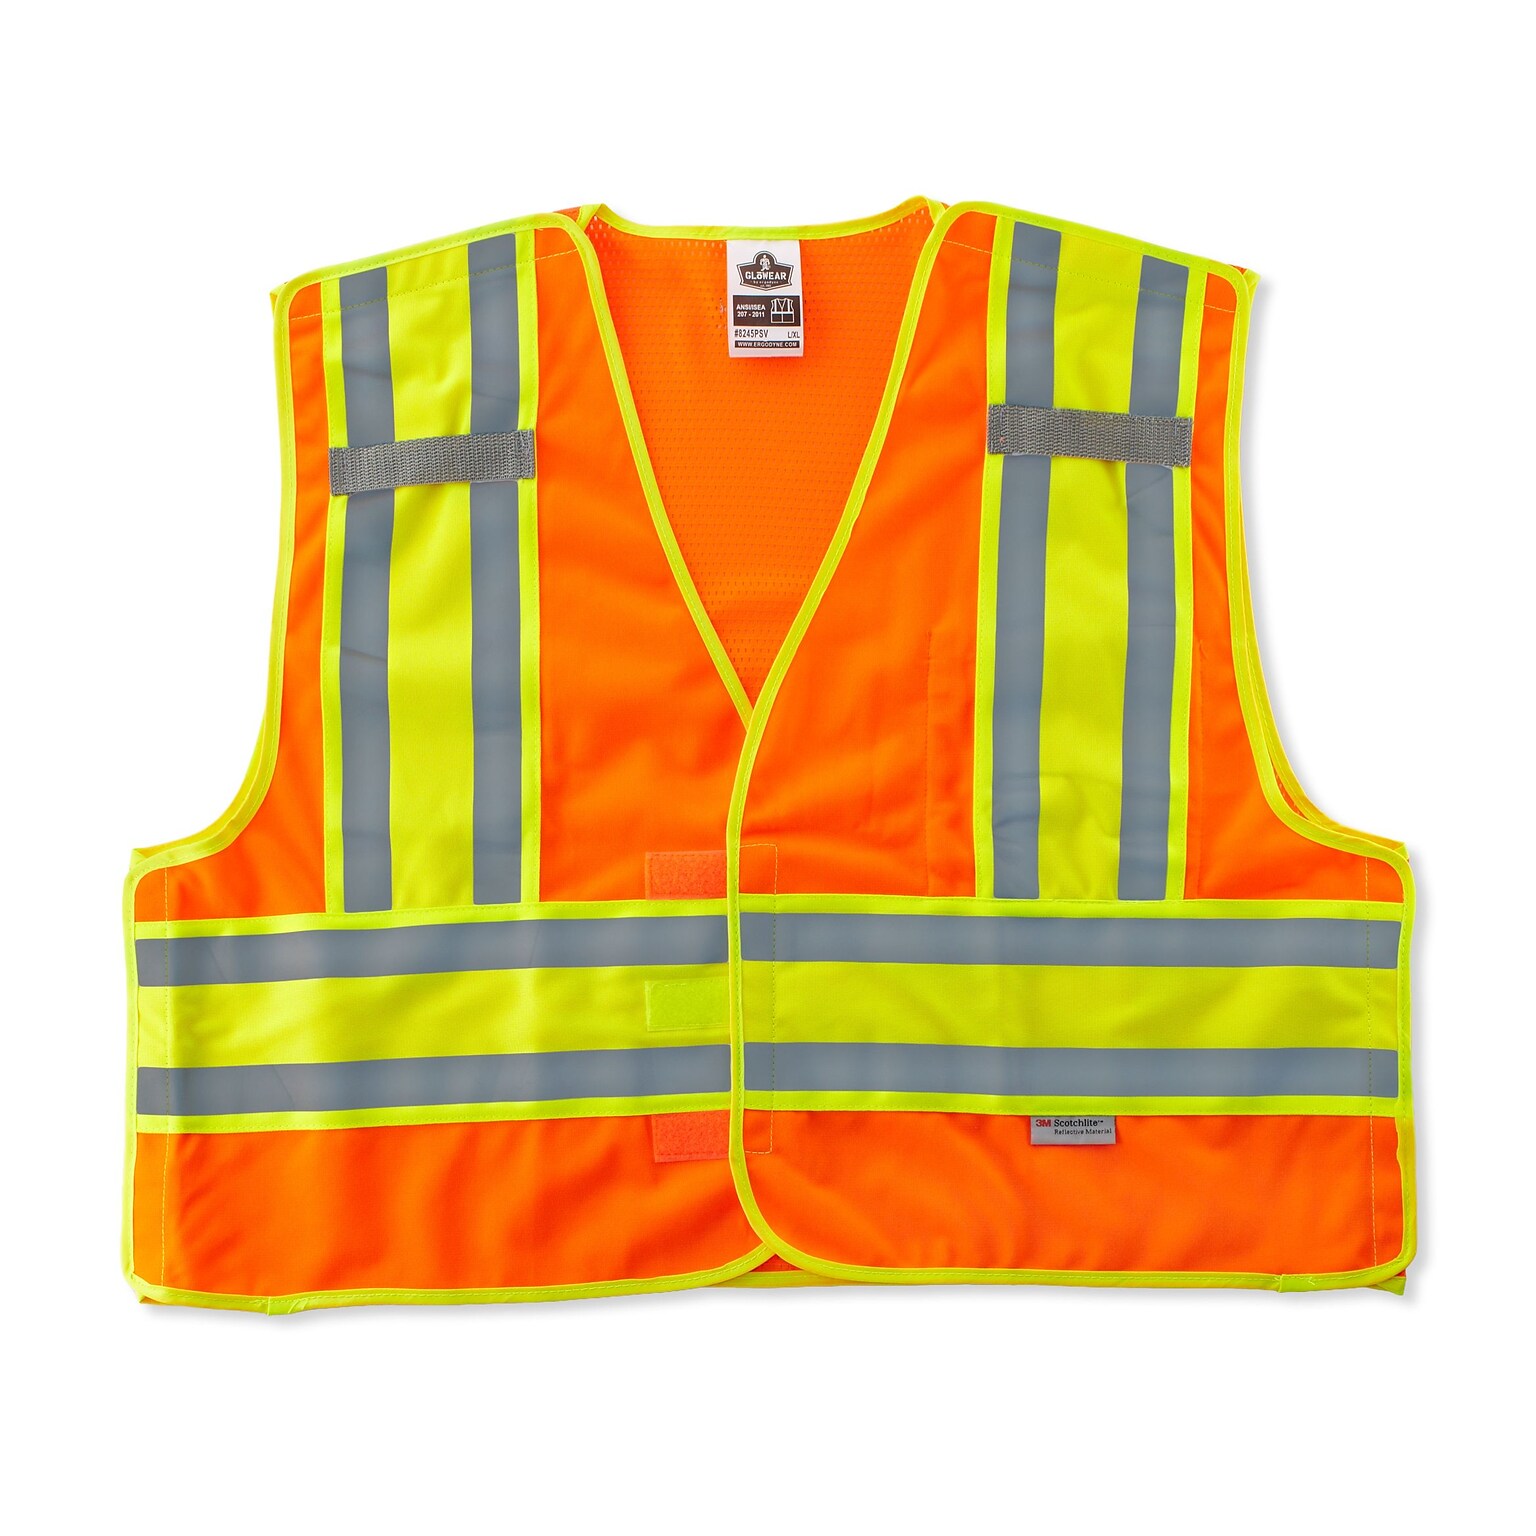 Ergodyne GloWear 8245 Public Safety Vest, ANSI Class R2, Orange, Large/XL (23385)